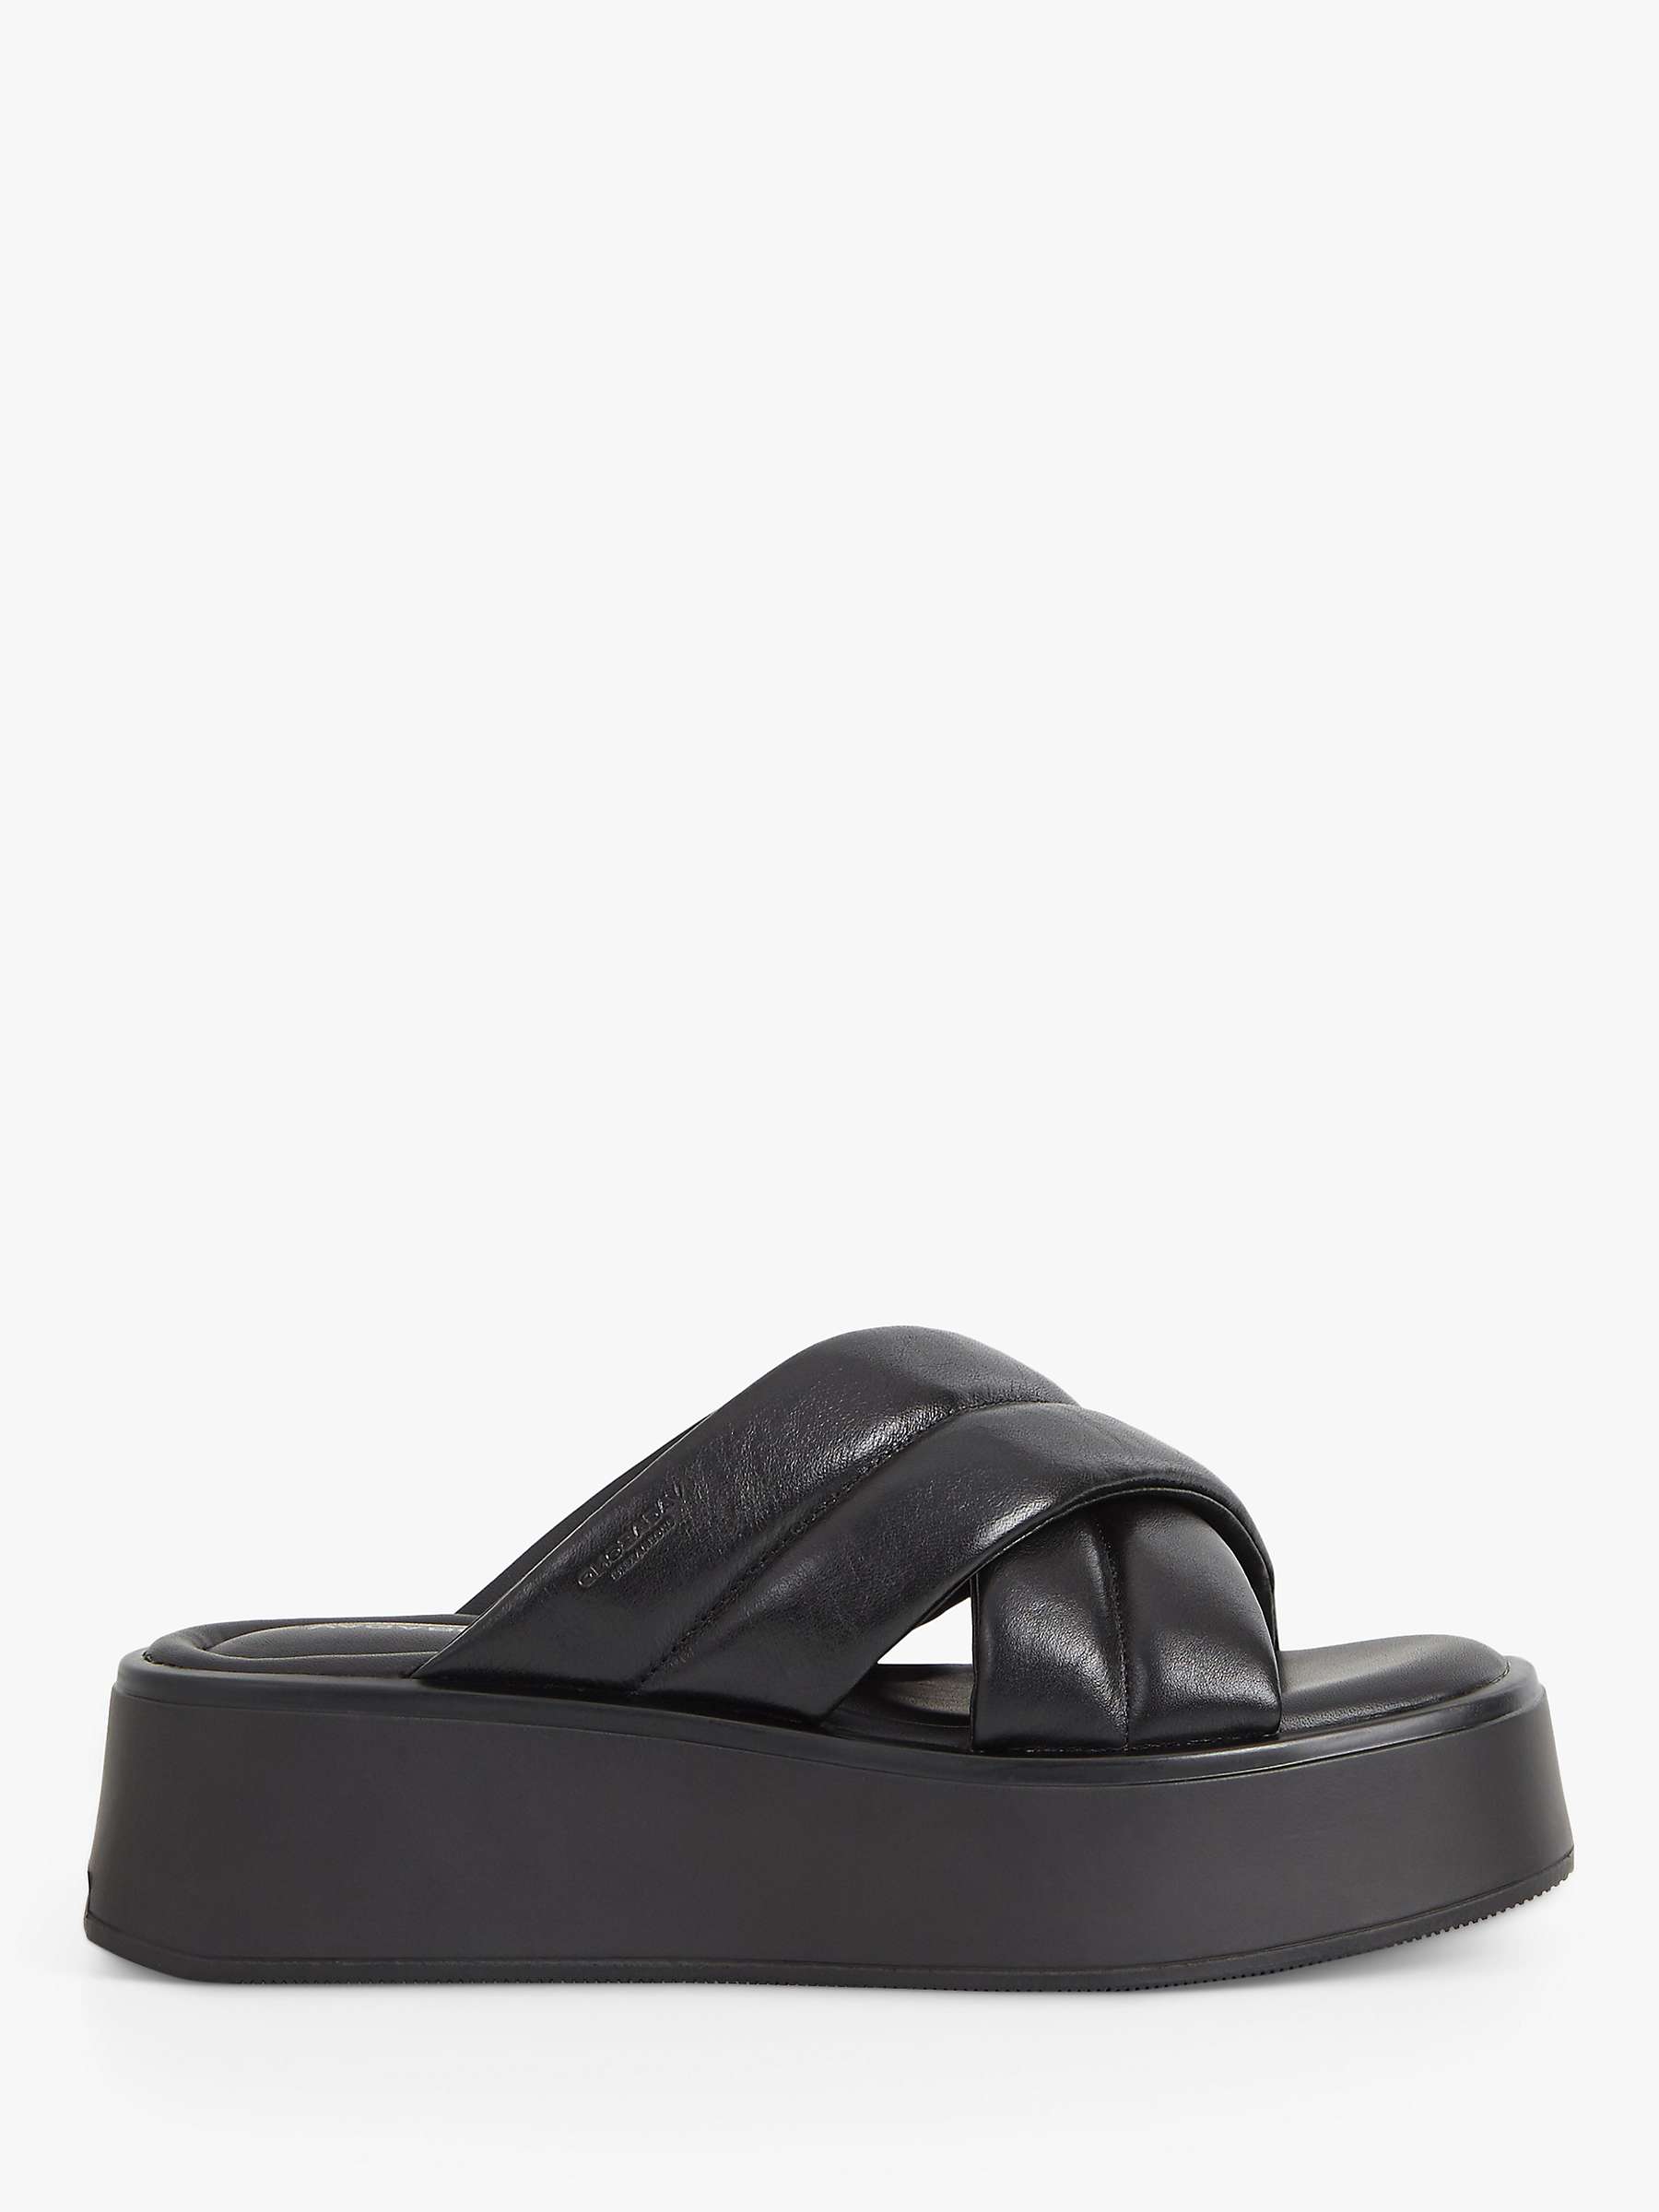 Vagabond Shoemakers Courtney Leather Flatform Mule Sandals, Black at ...